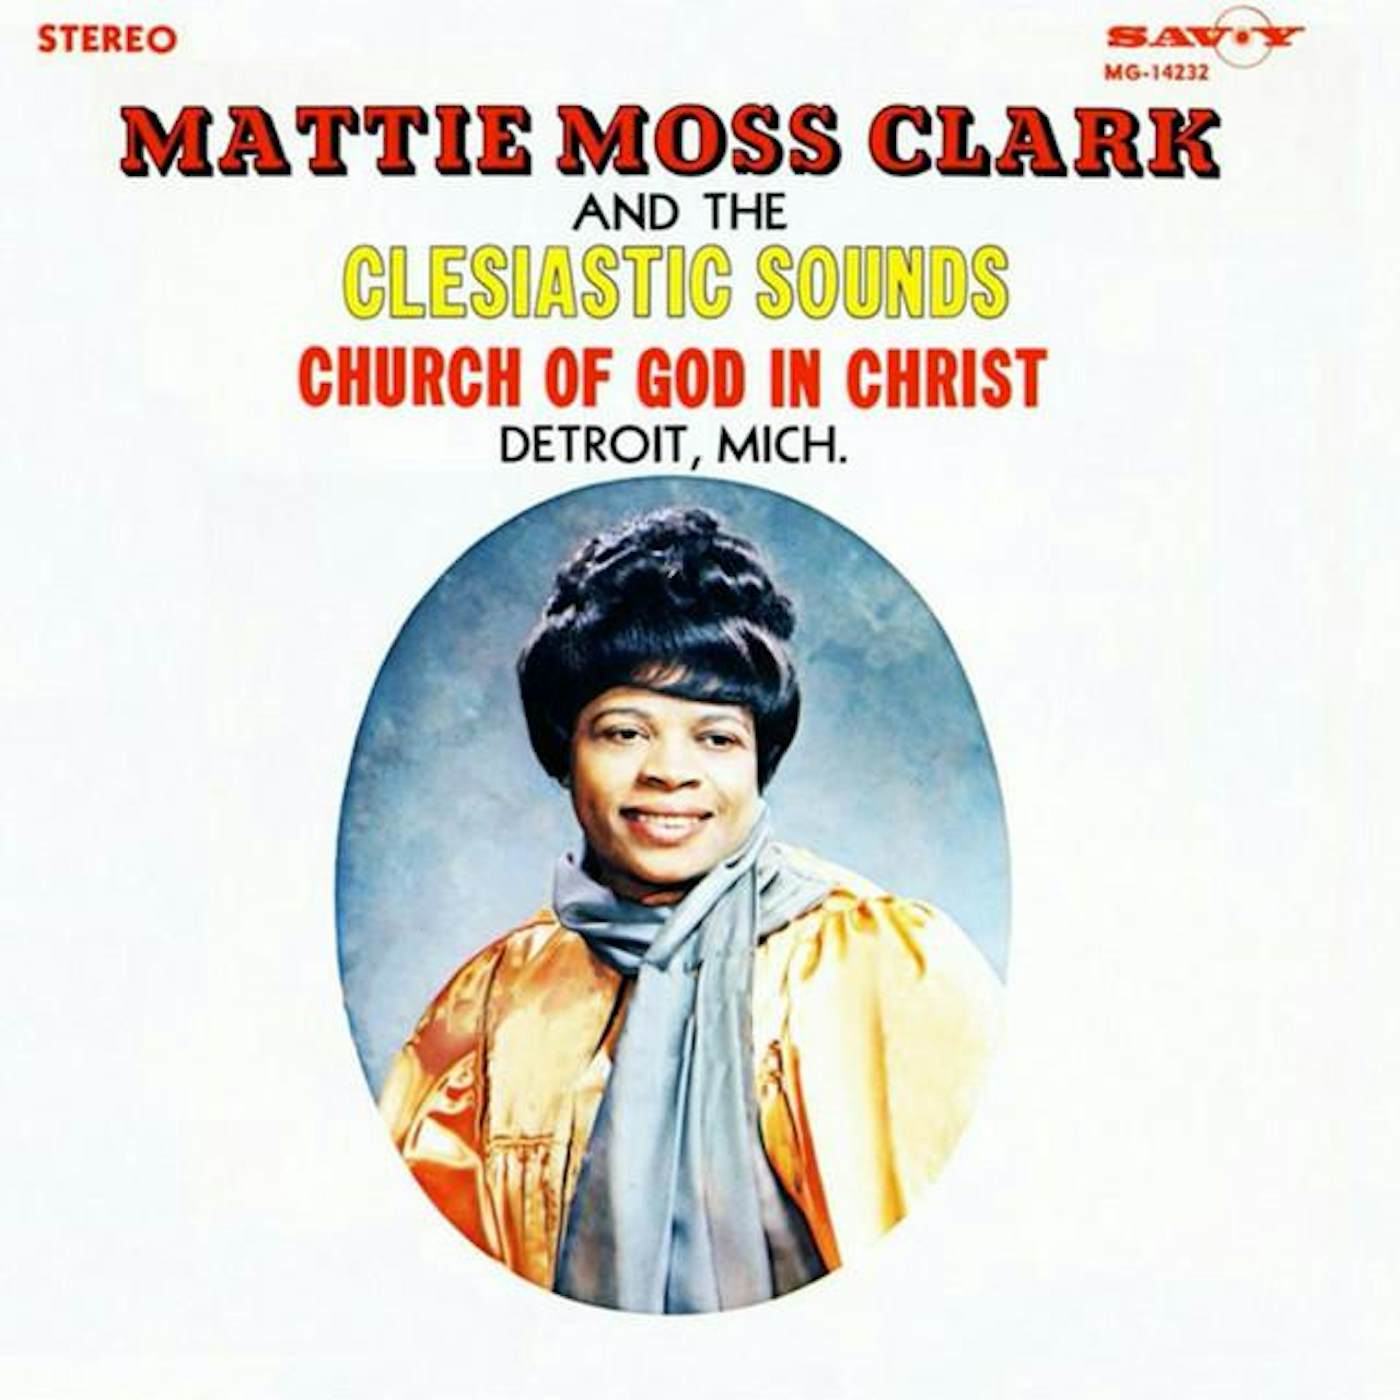 Mattie Moss Clark